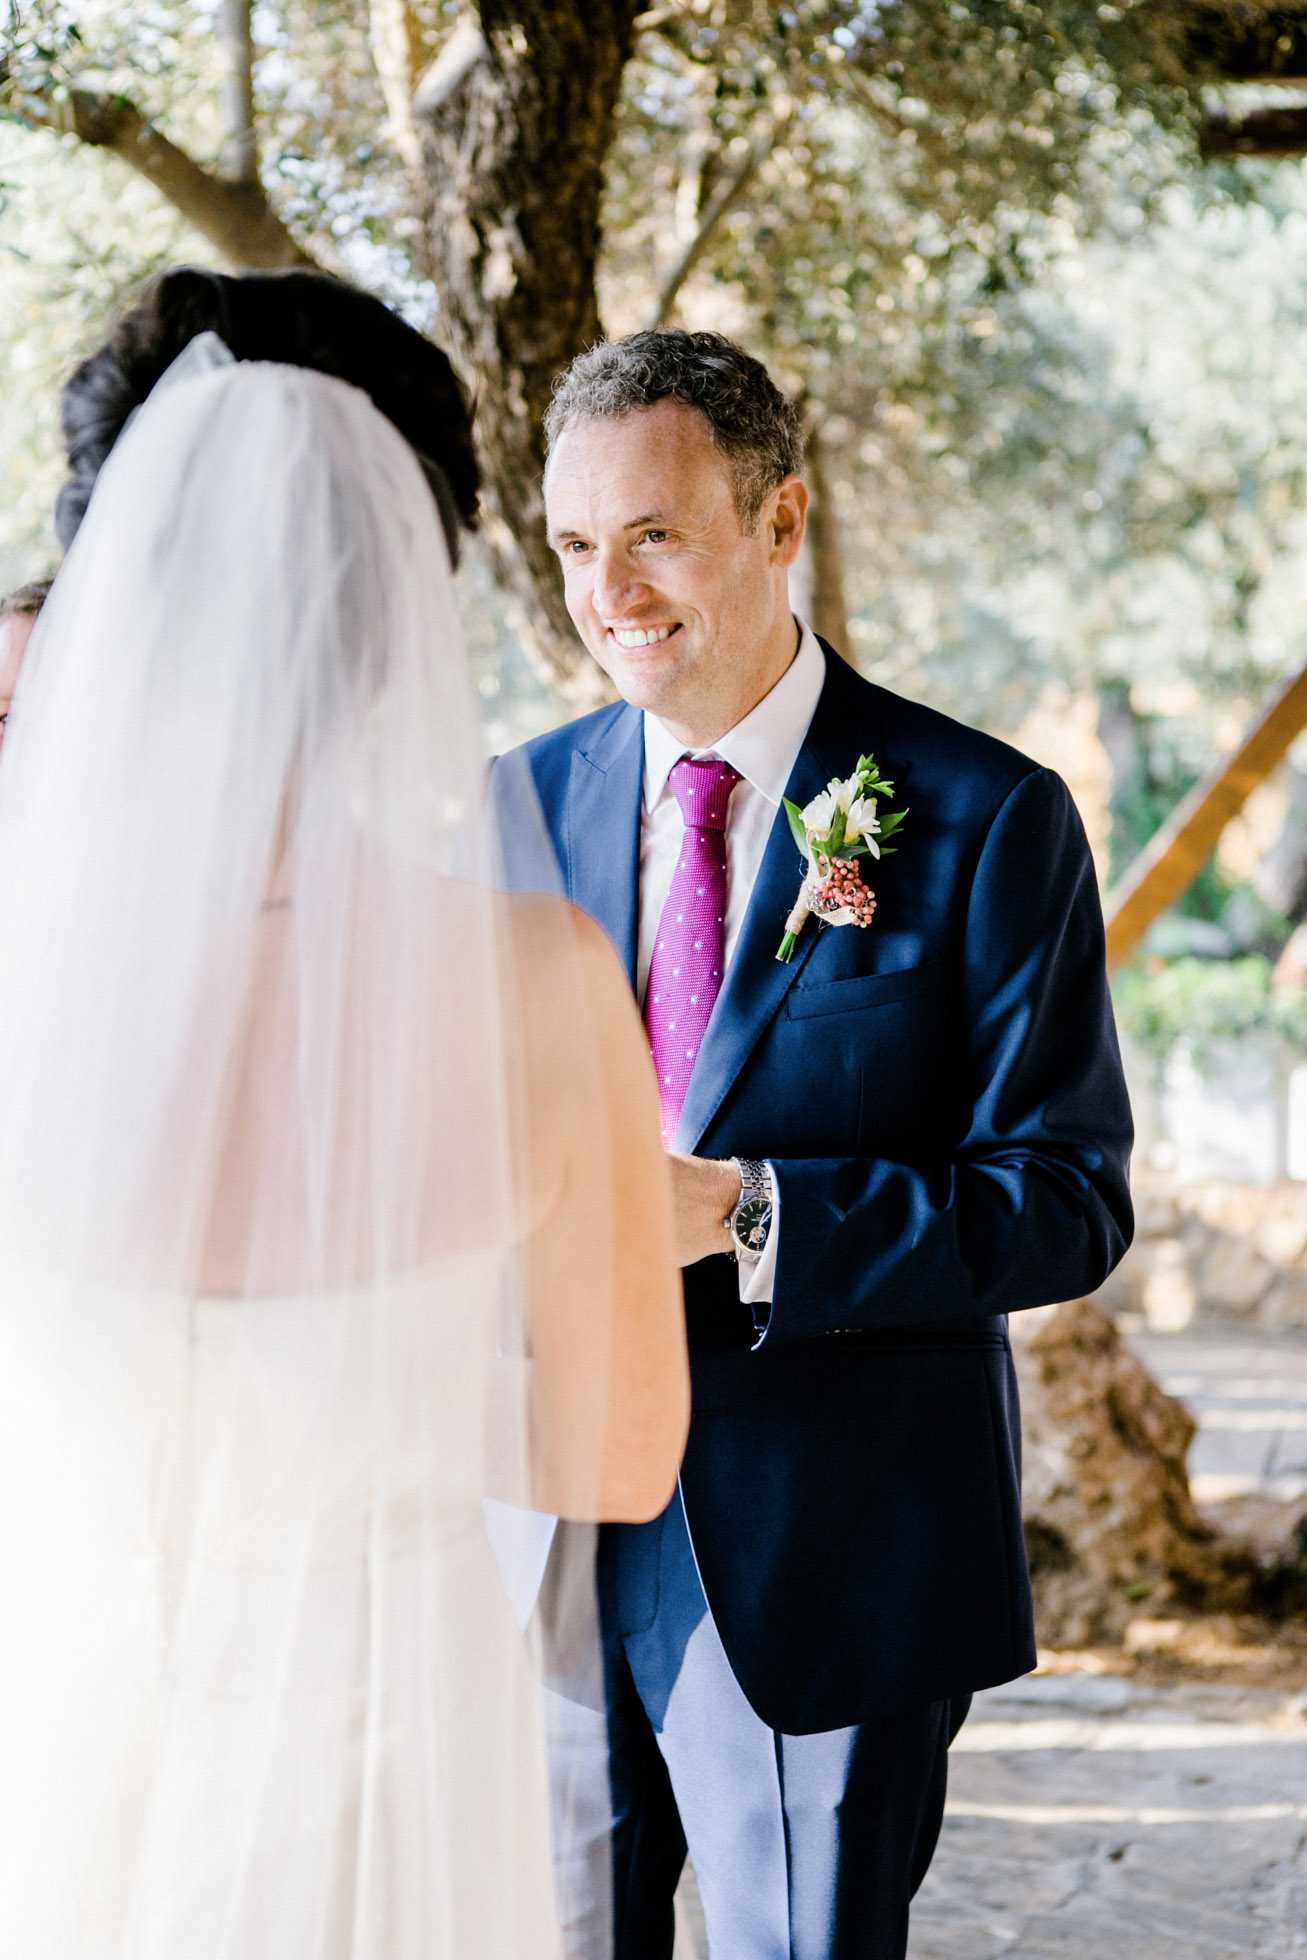 Destination wedding ceremony in Crete, Greece.